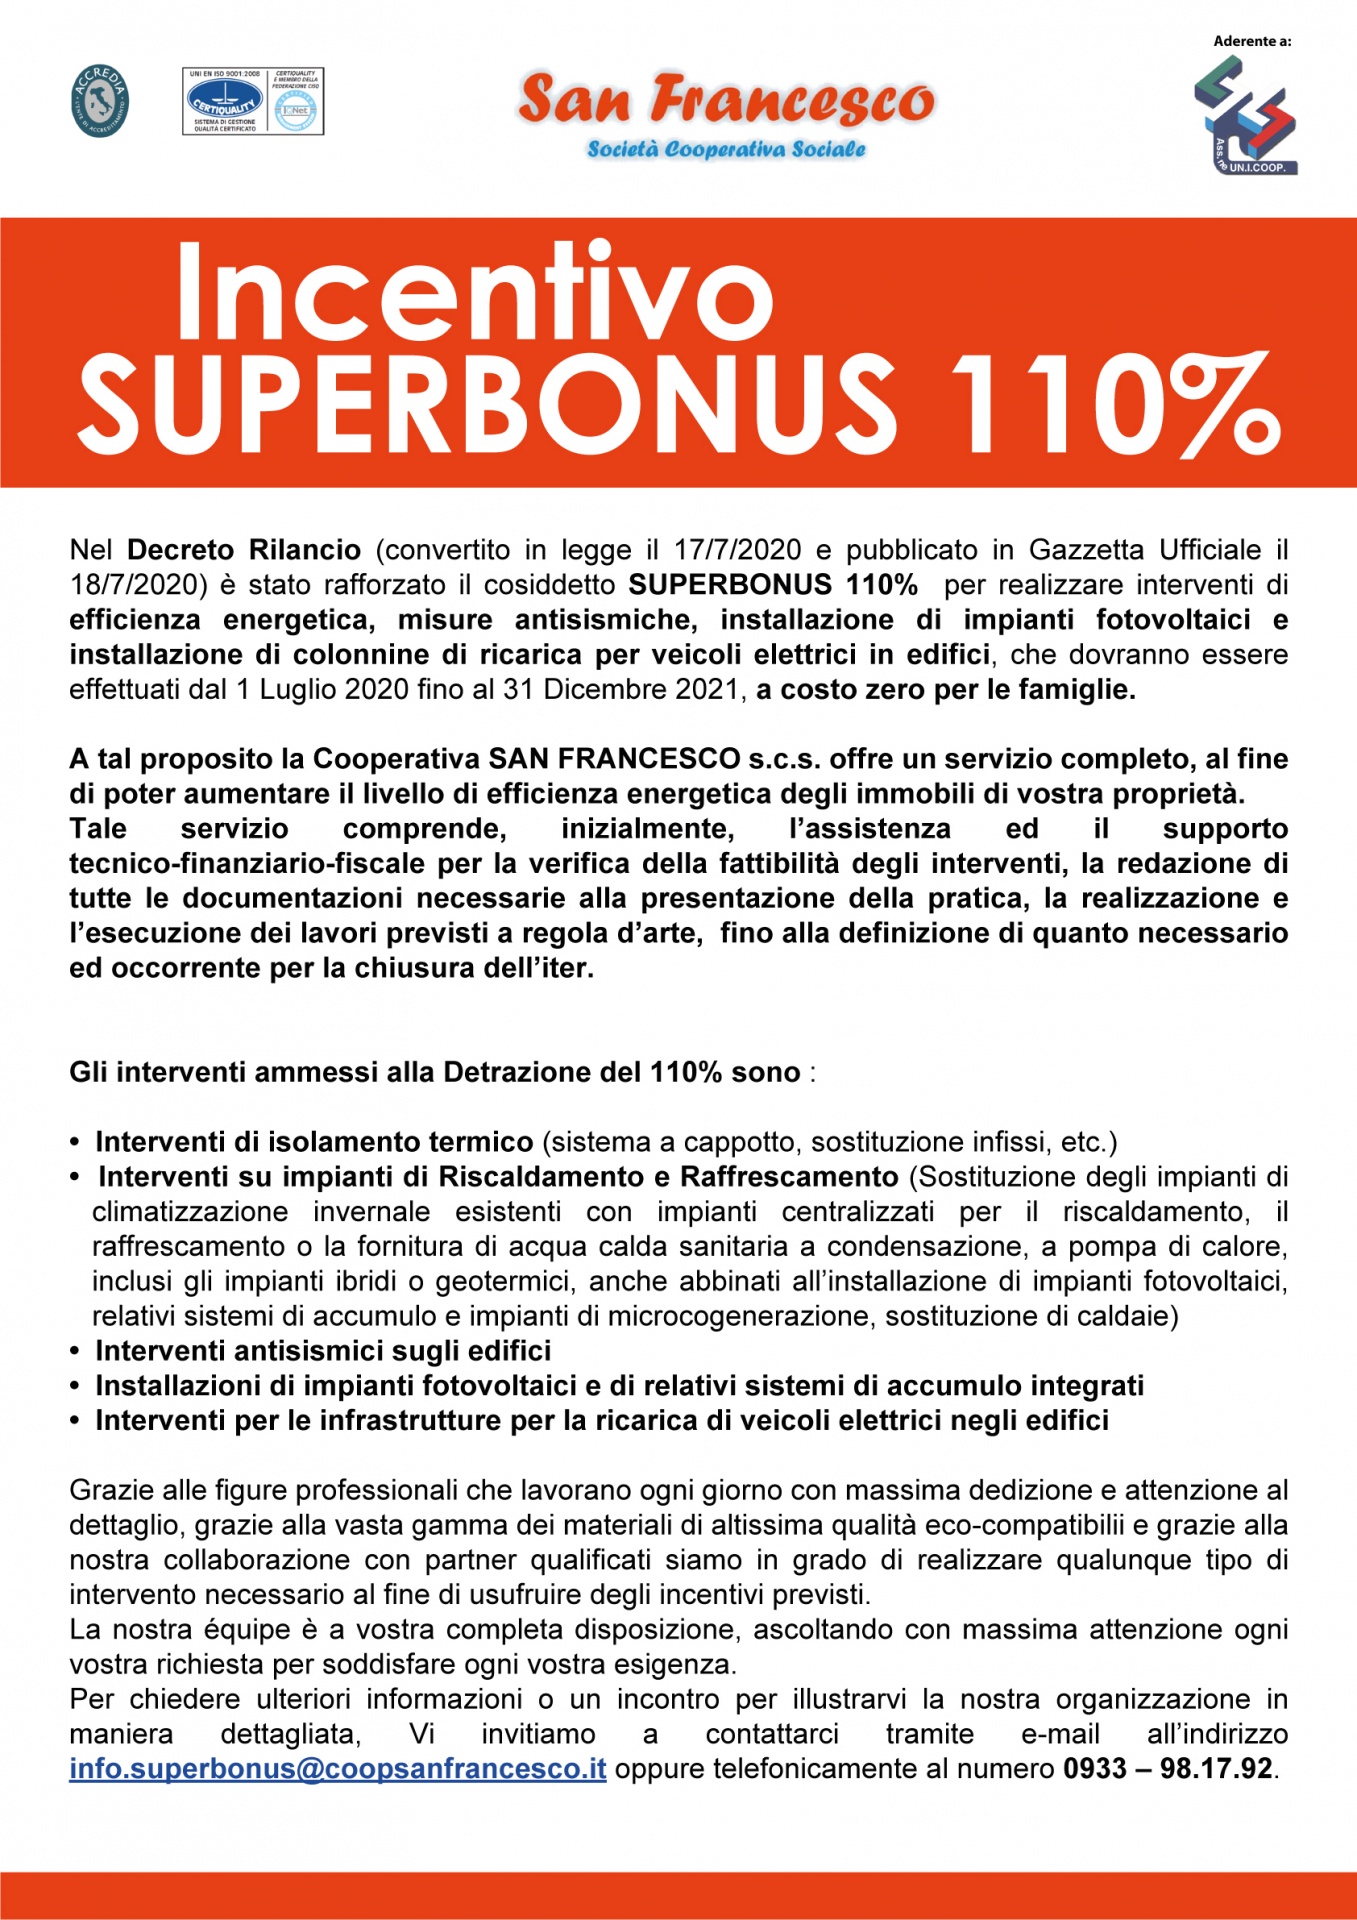 Incentivo SUPERBONUS 110%: la Coop. "San Francesco" offre la propria competenza